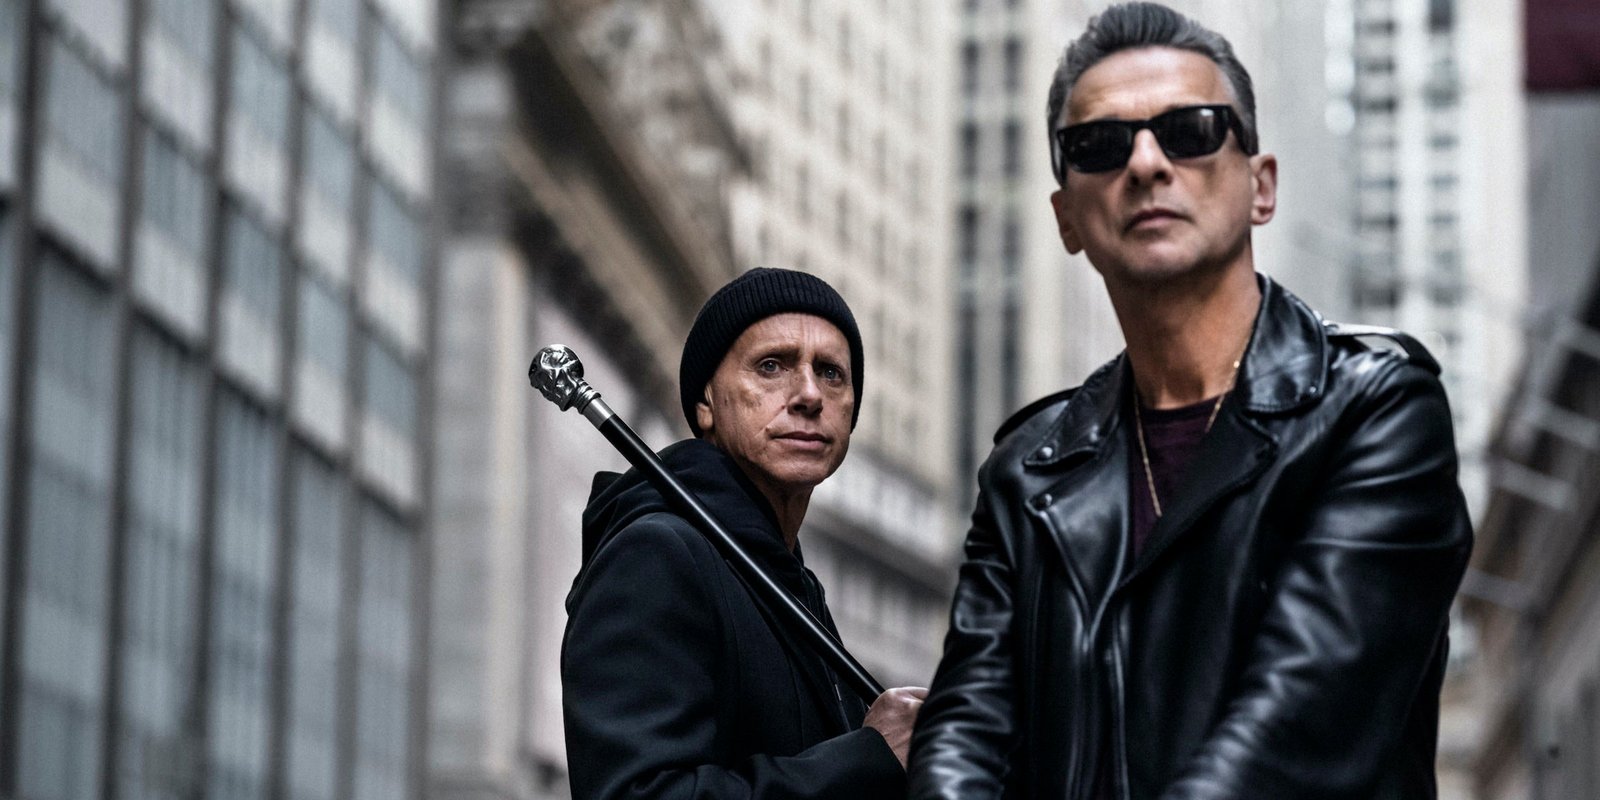 Depeche Mode's religion in question